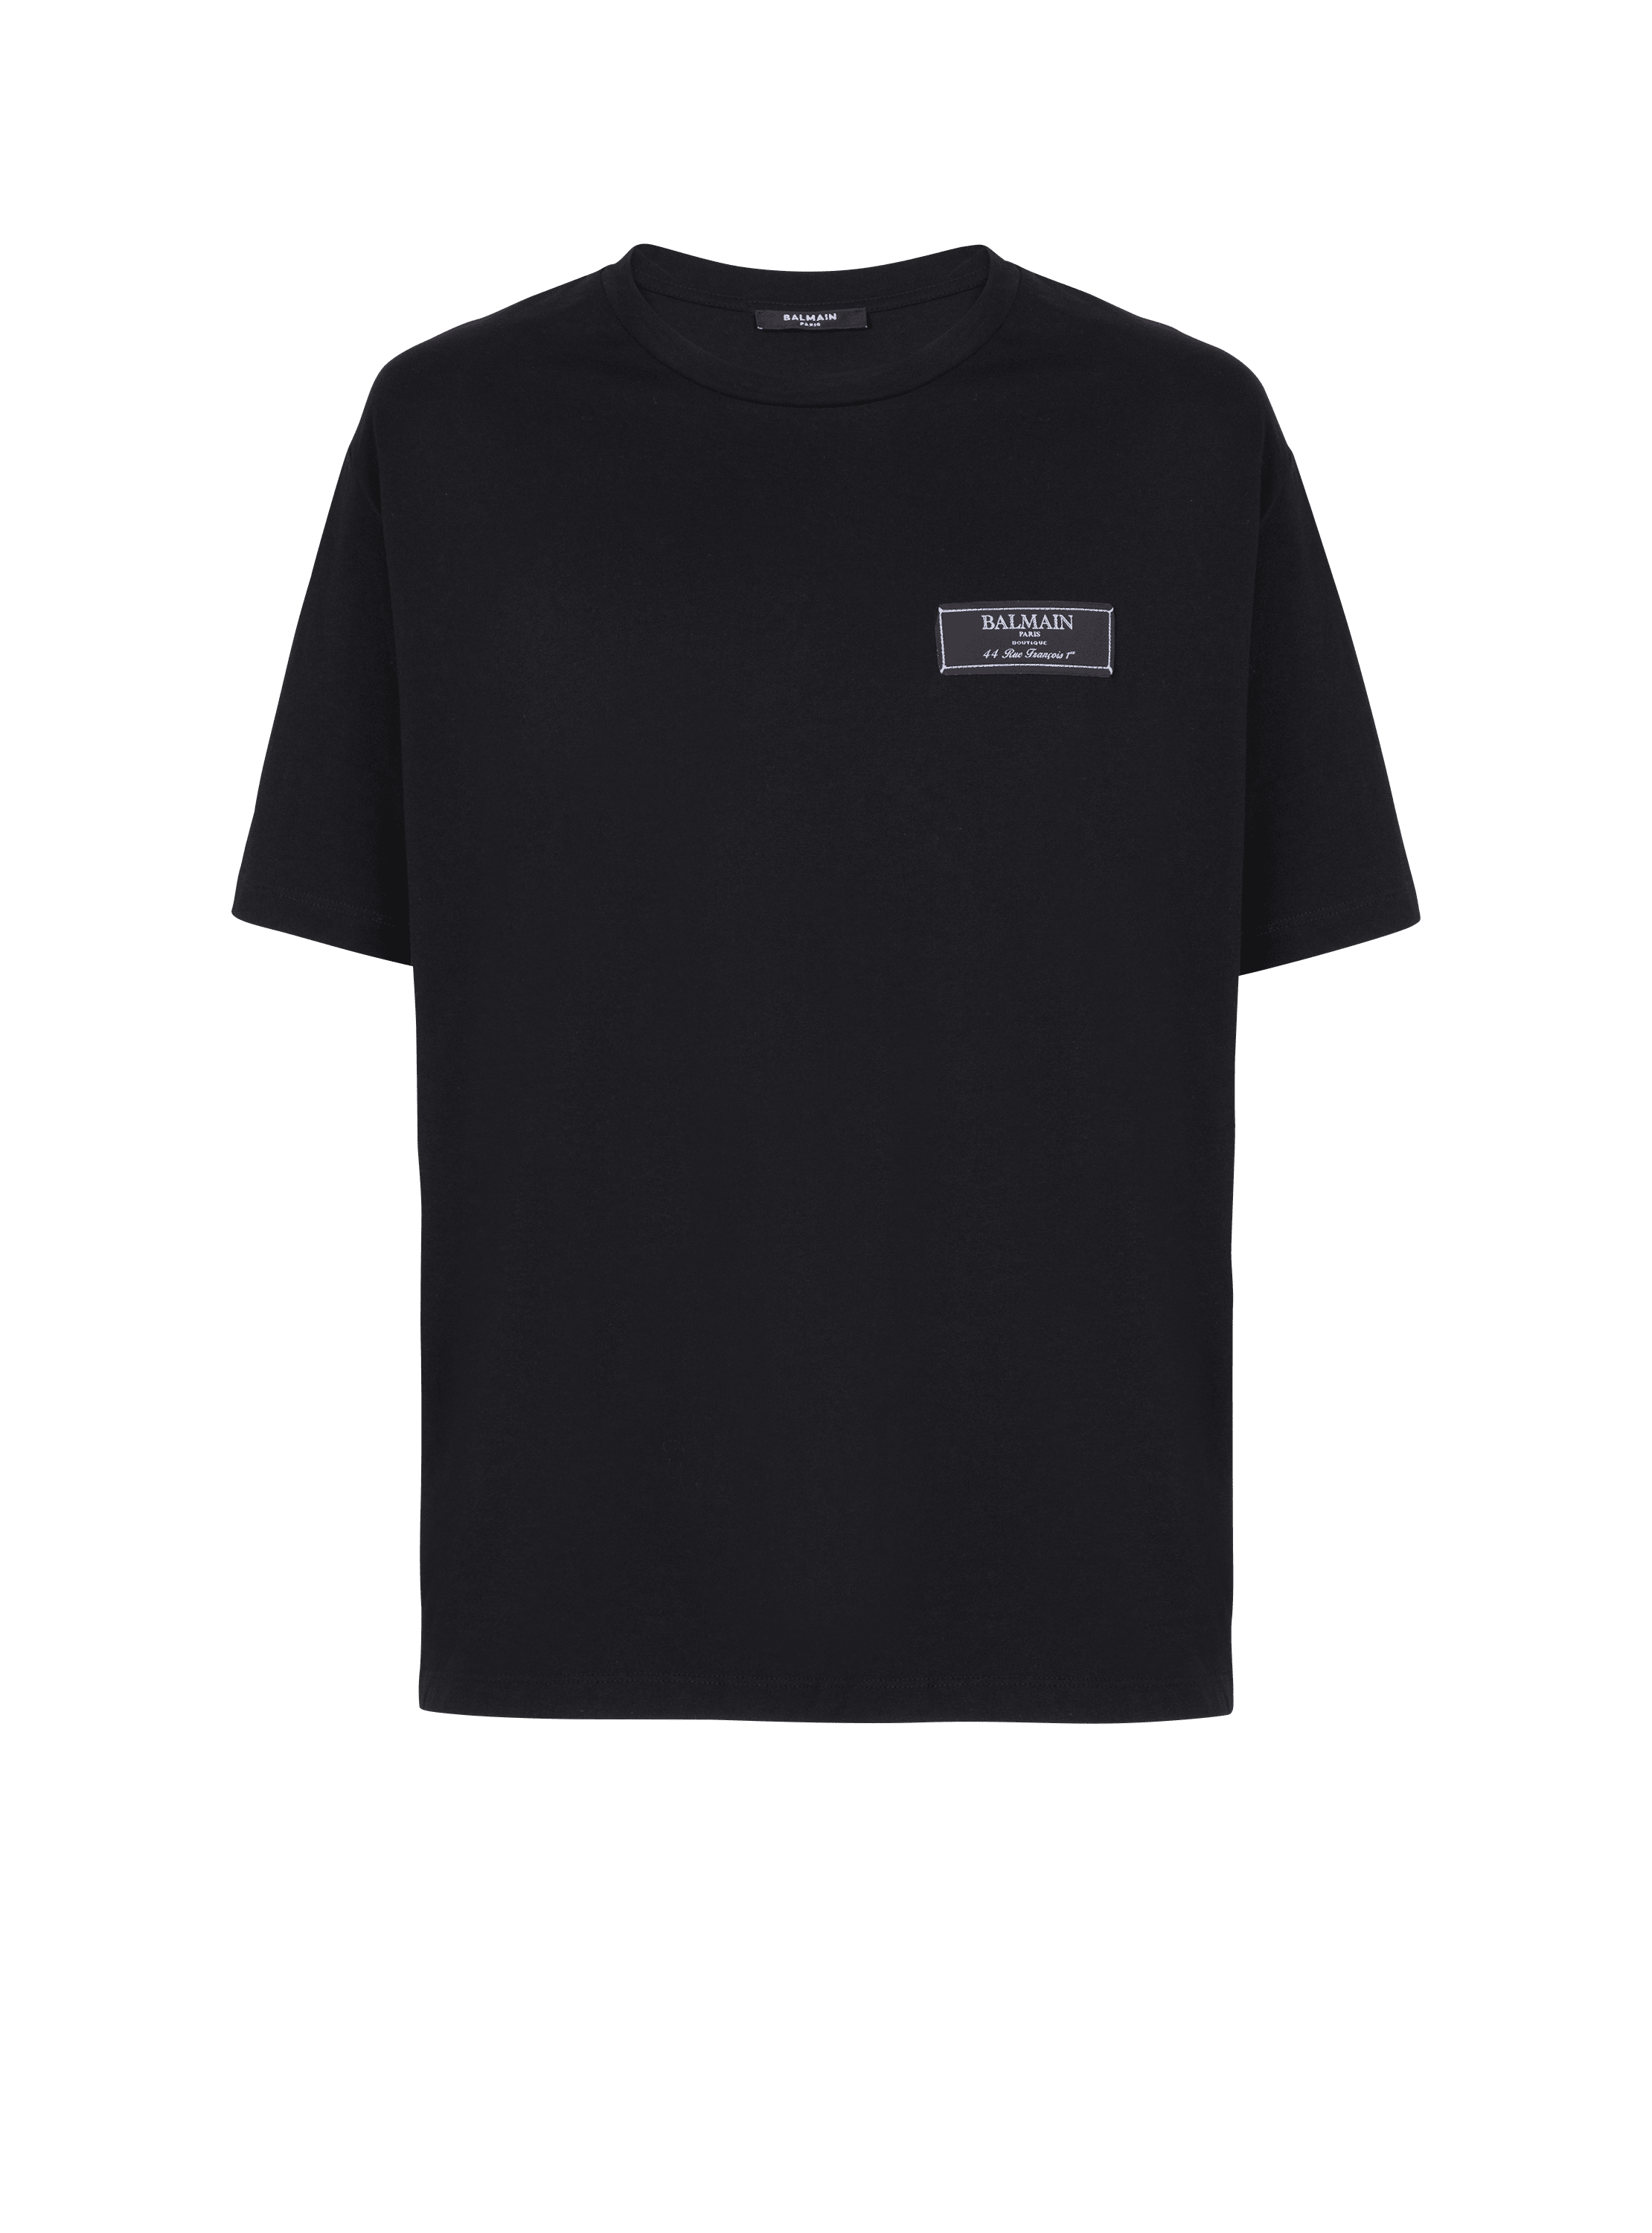 T-Shirt mit Balmain-Etikett